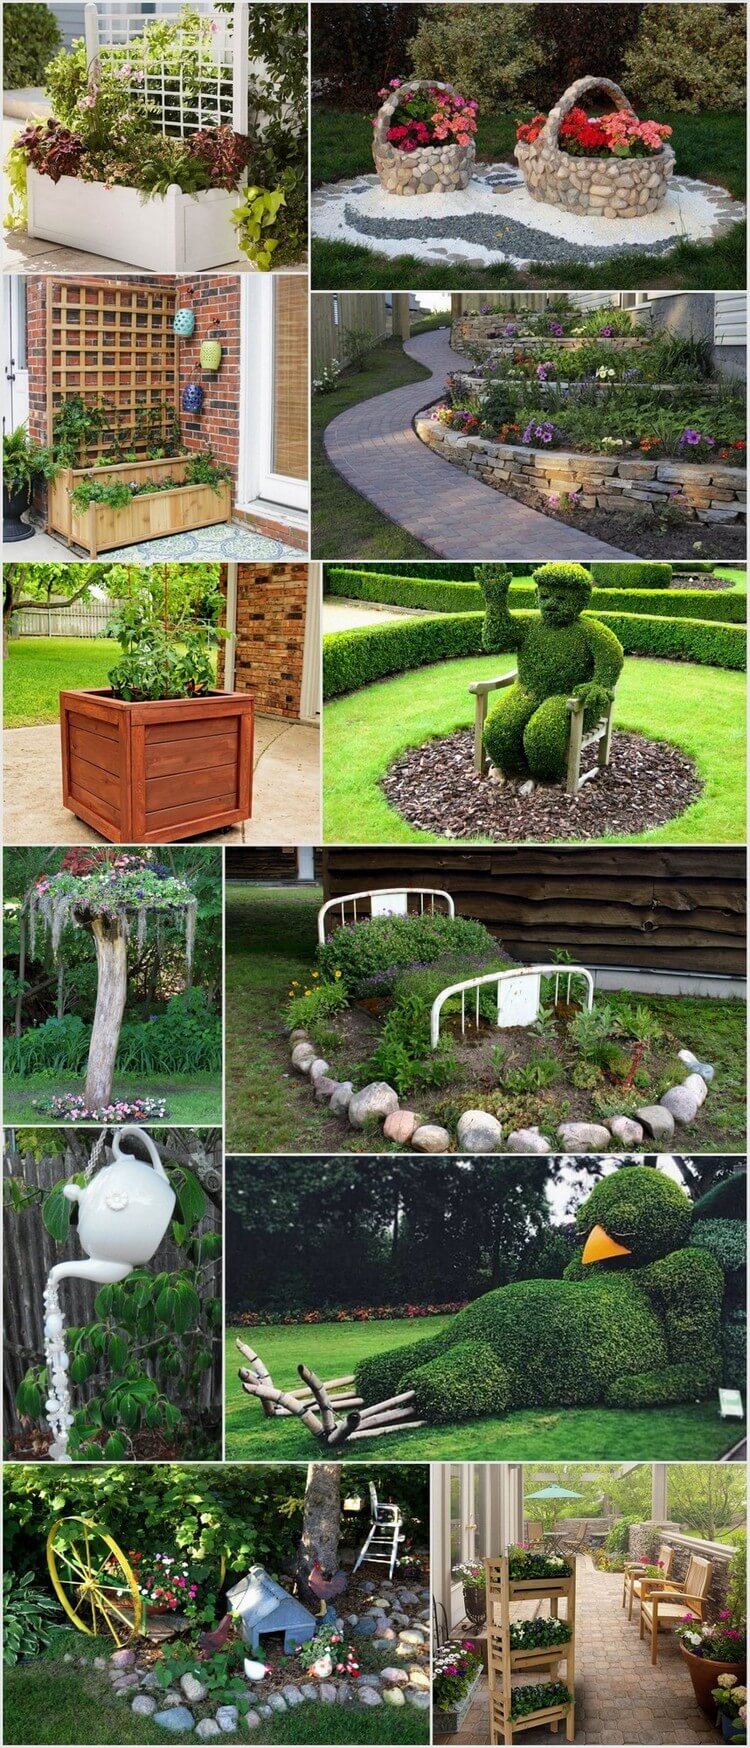 DIY Garden Art Ideas To Enjoy This Summer